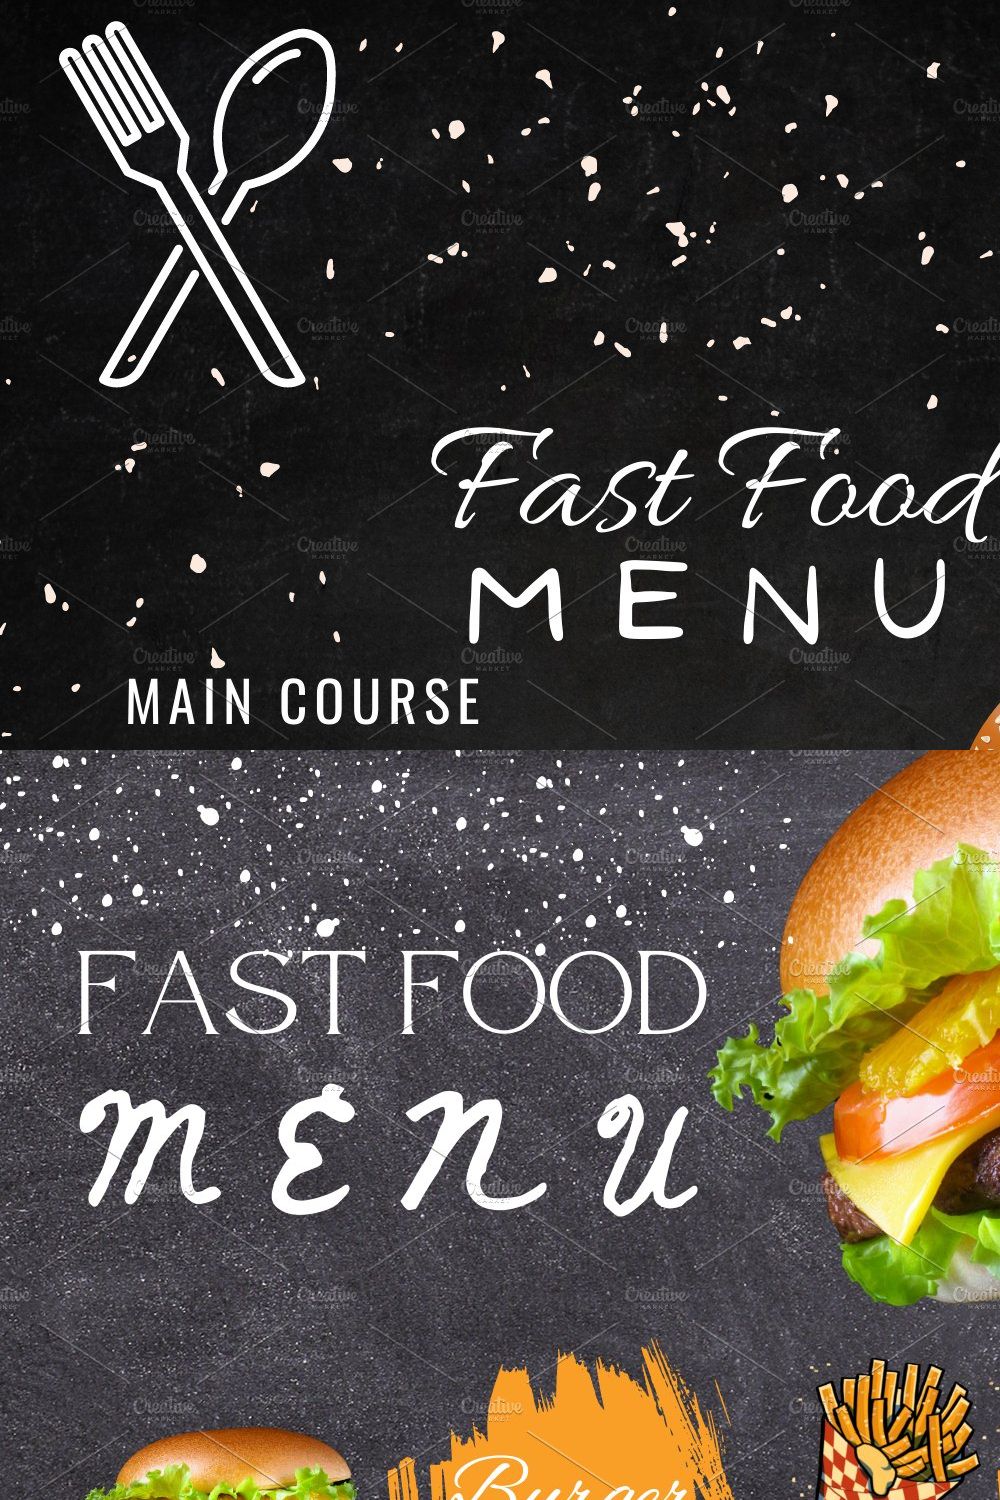 Fast Food Menu pinterest preview image.